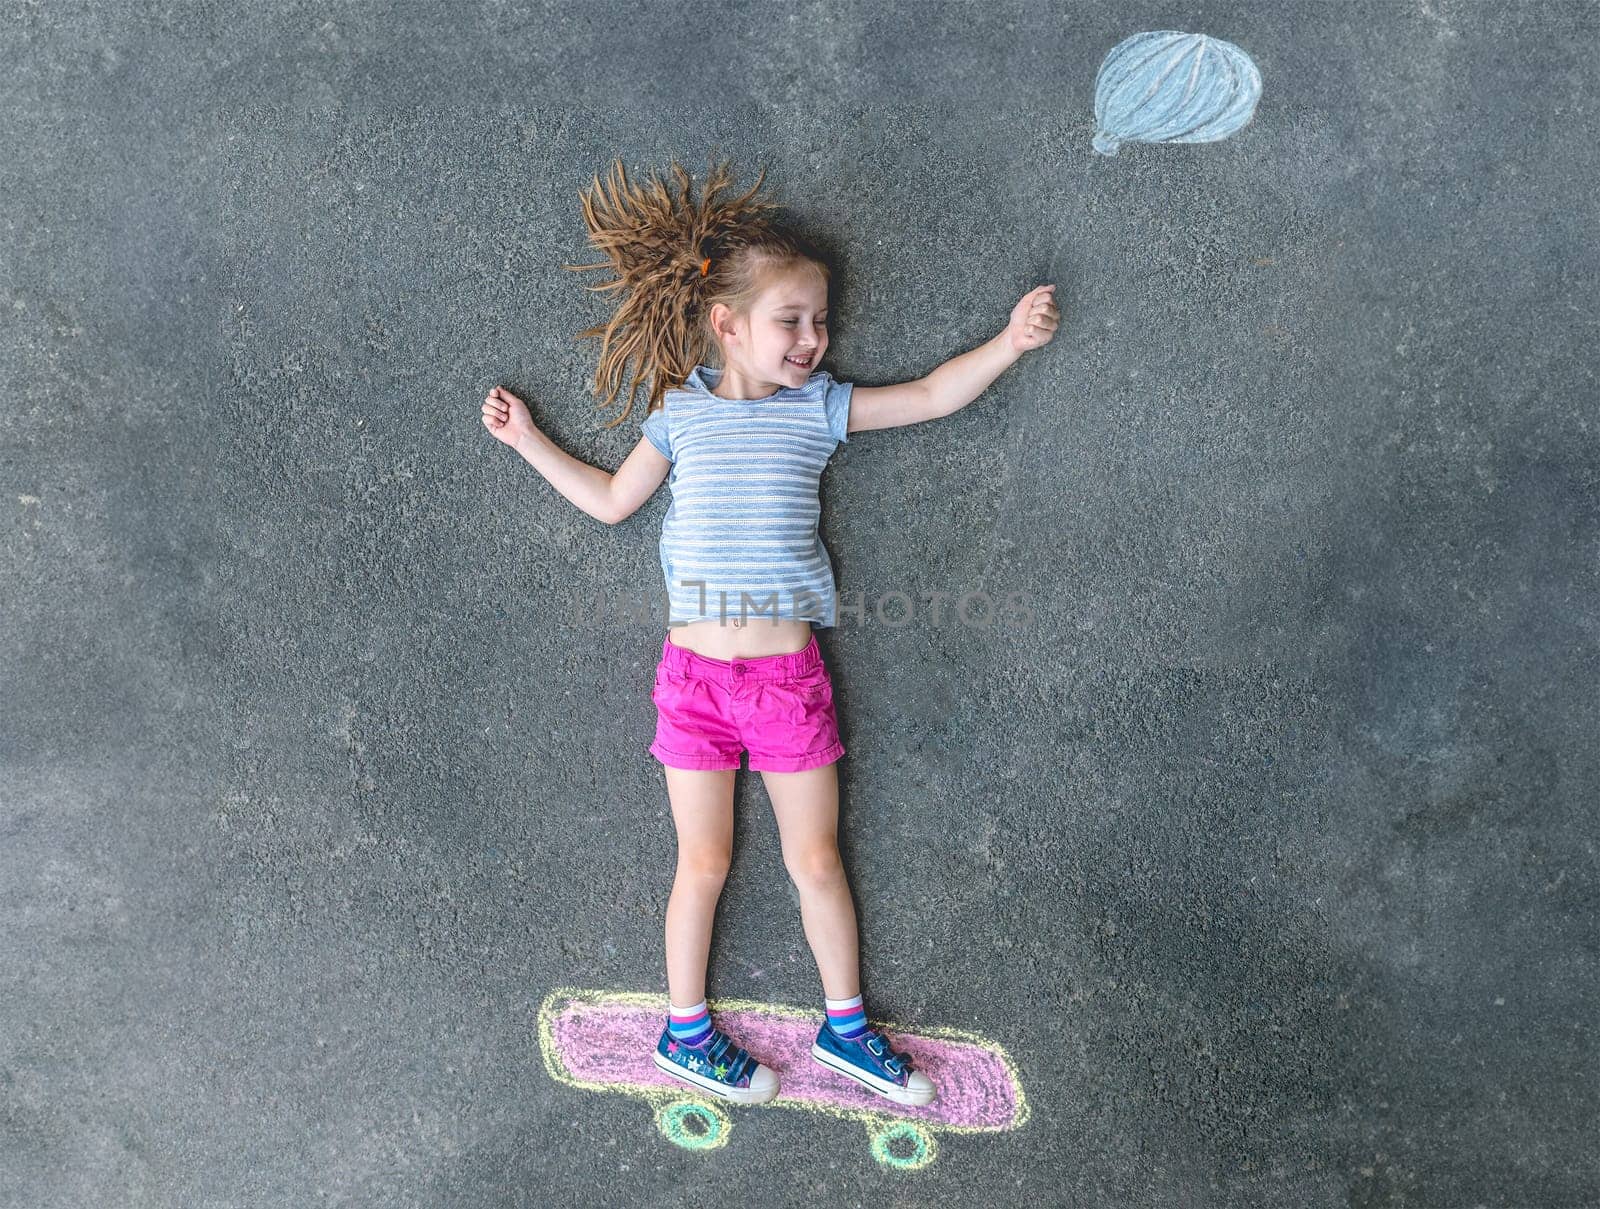 little girl skateboard by tan4ikk1